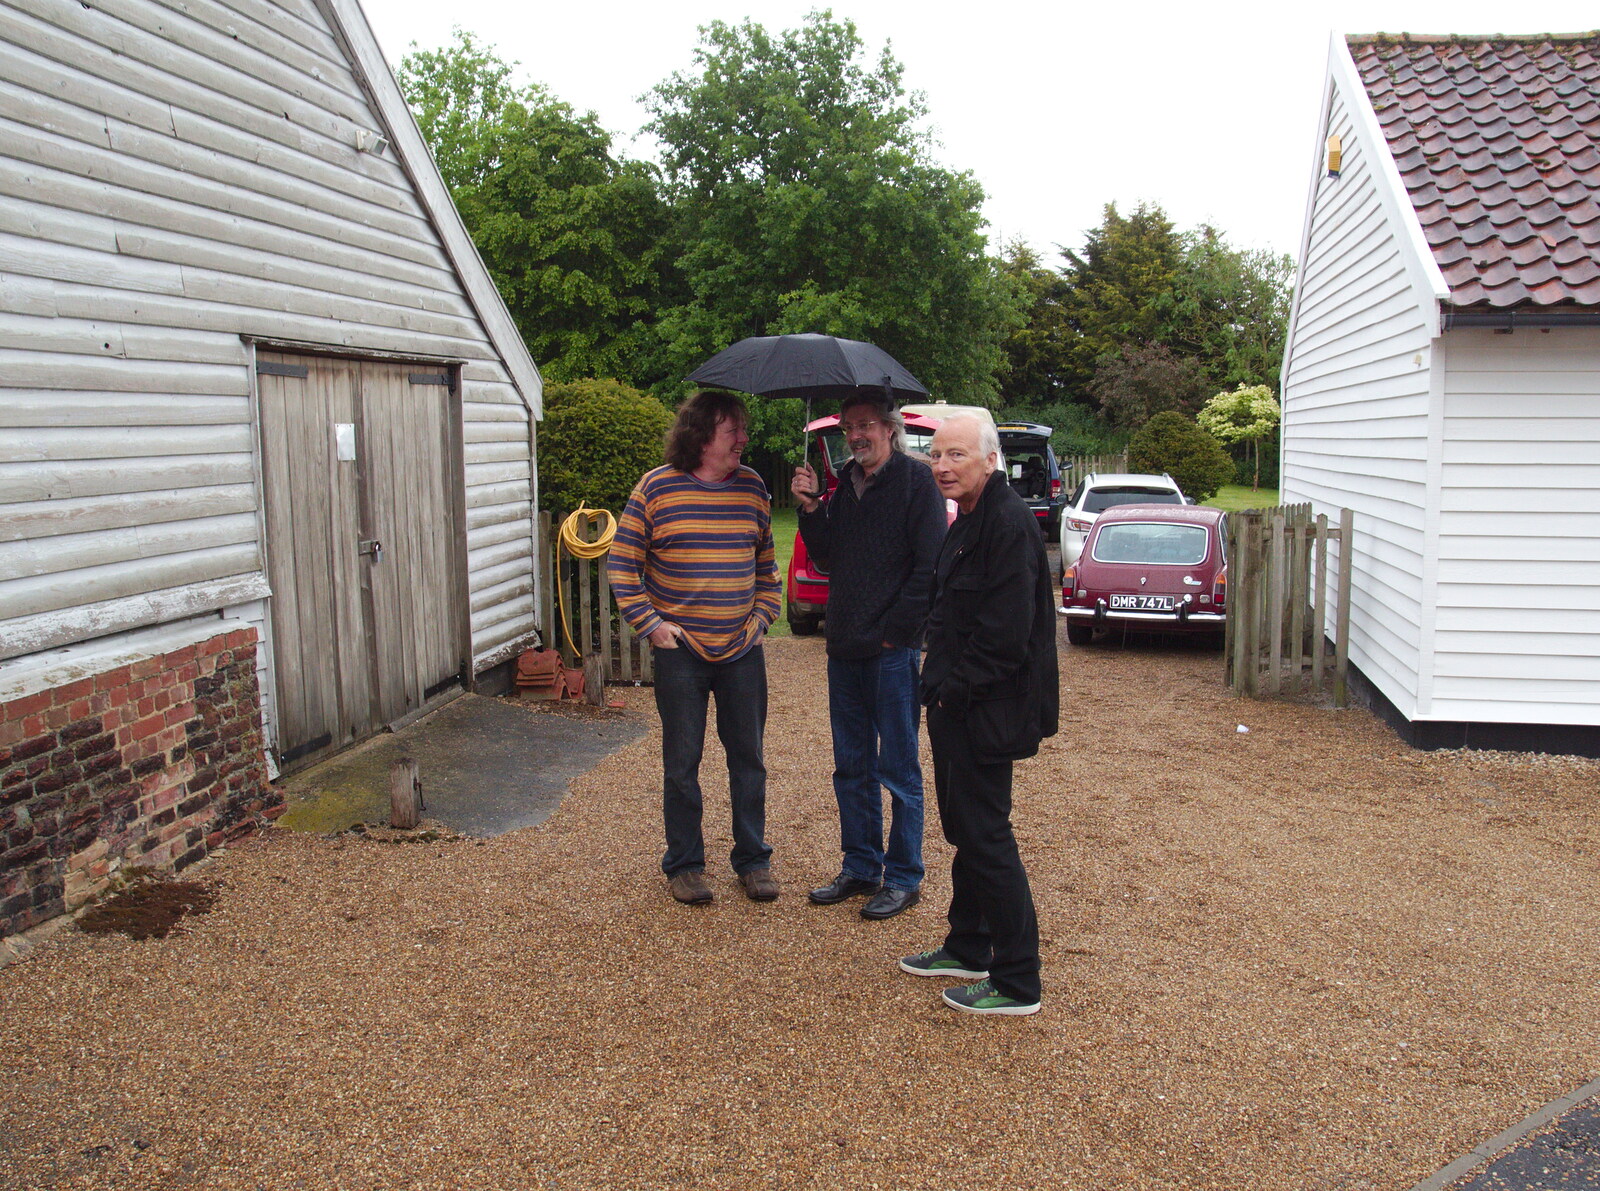 Max and Rob hide under an umbrella from The BBs Play Scrabble at Wingfield Barns, Wingfield, Suffolk - 24th May 2014